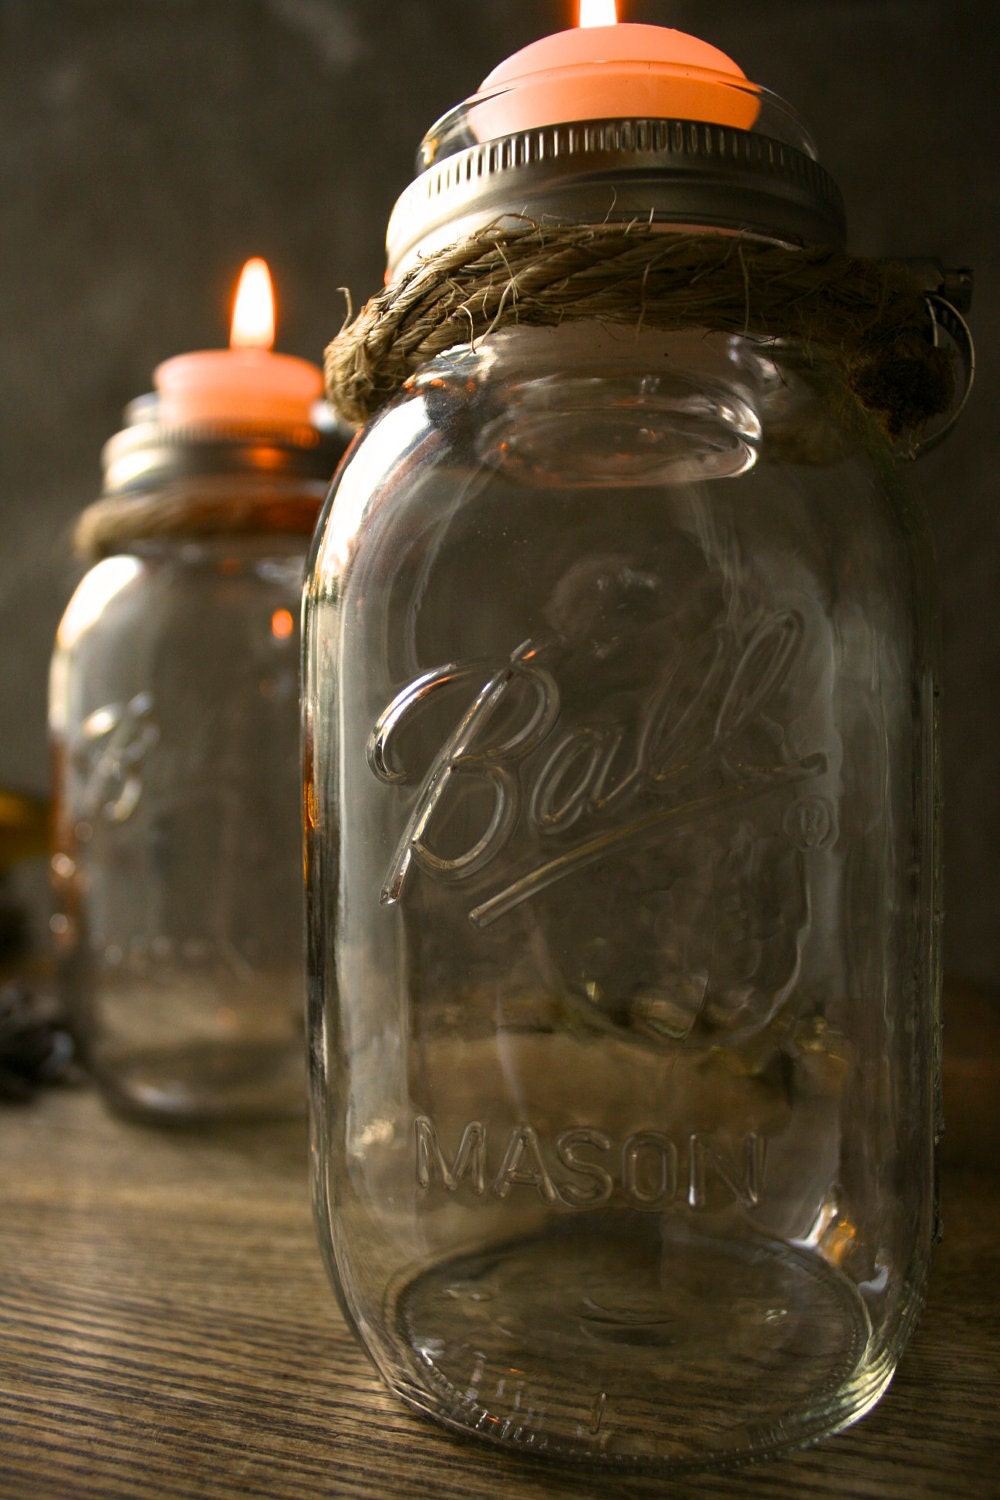 Pair of Mason Jar Candle Holders Rustic Wedding Decor Glass Lighting Shabby Chic Lighting - Rustic Rope Design